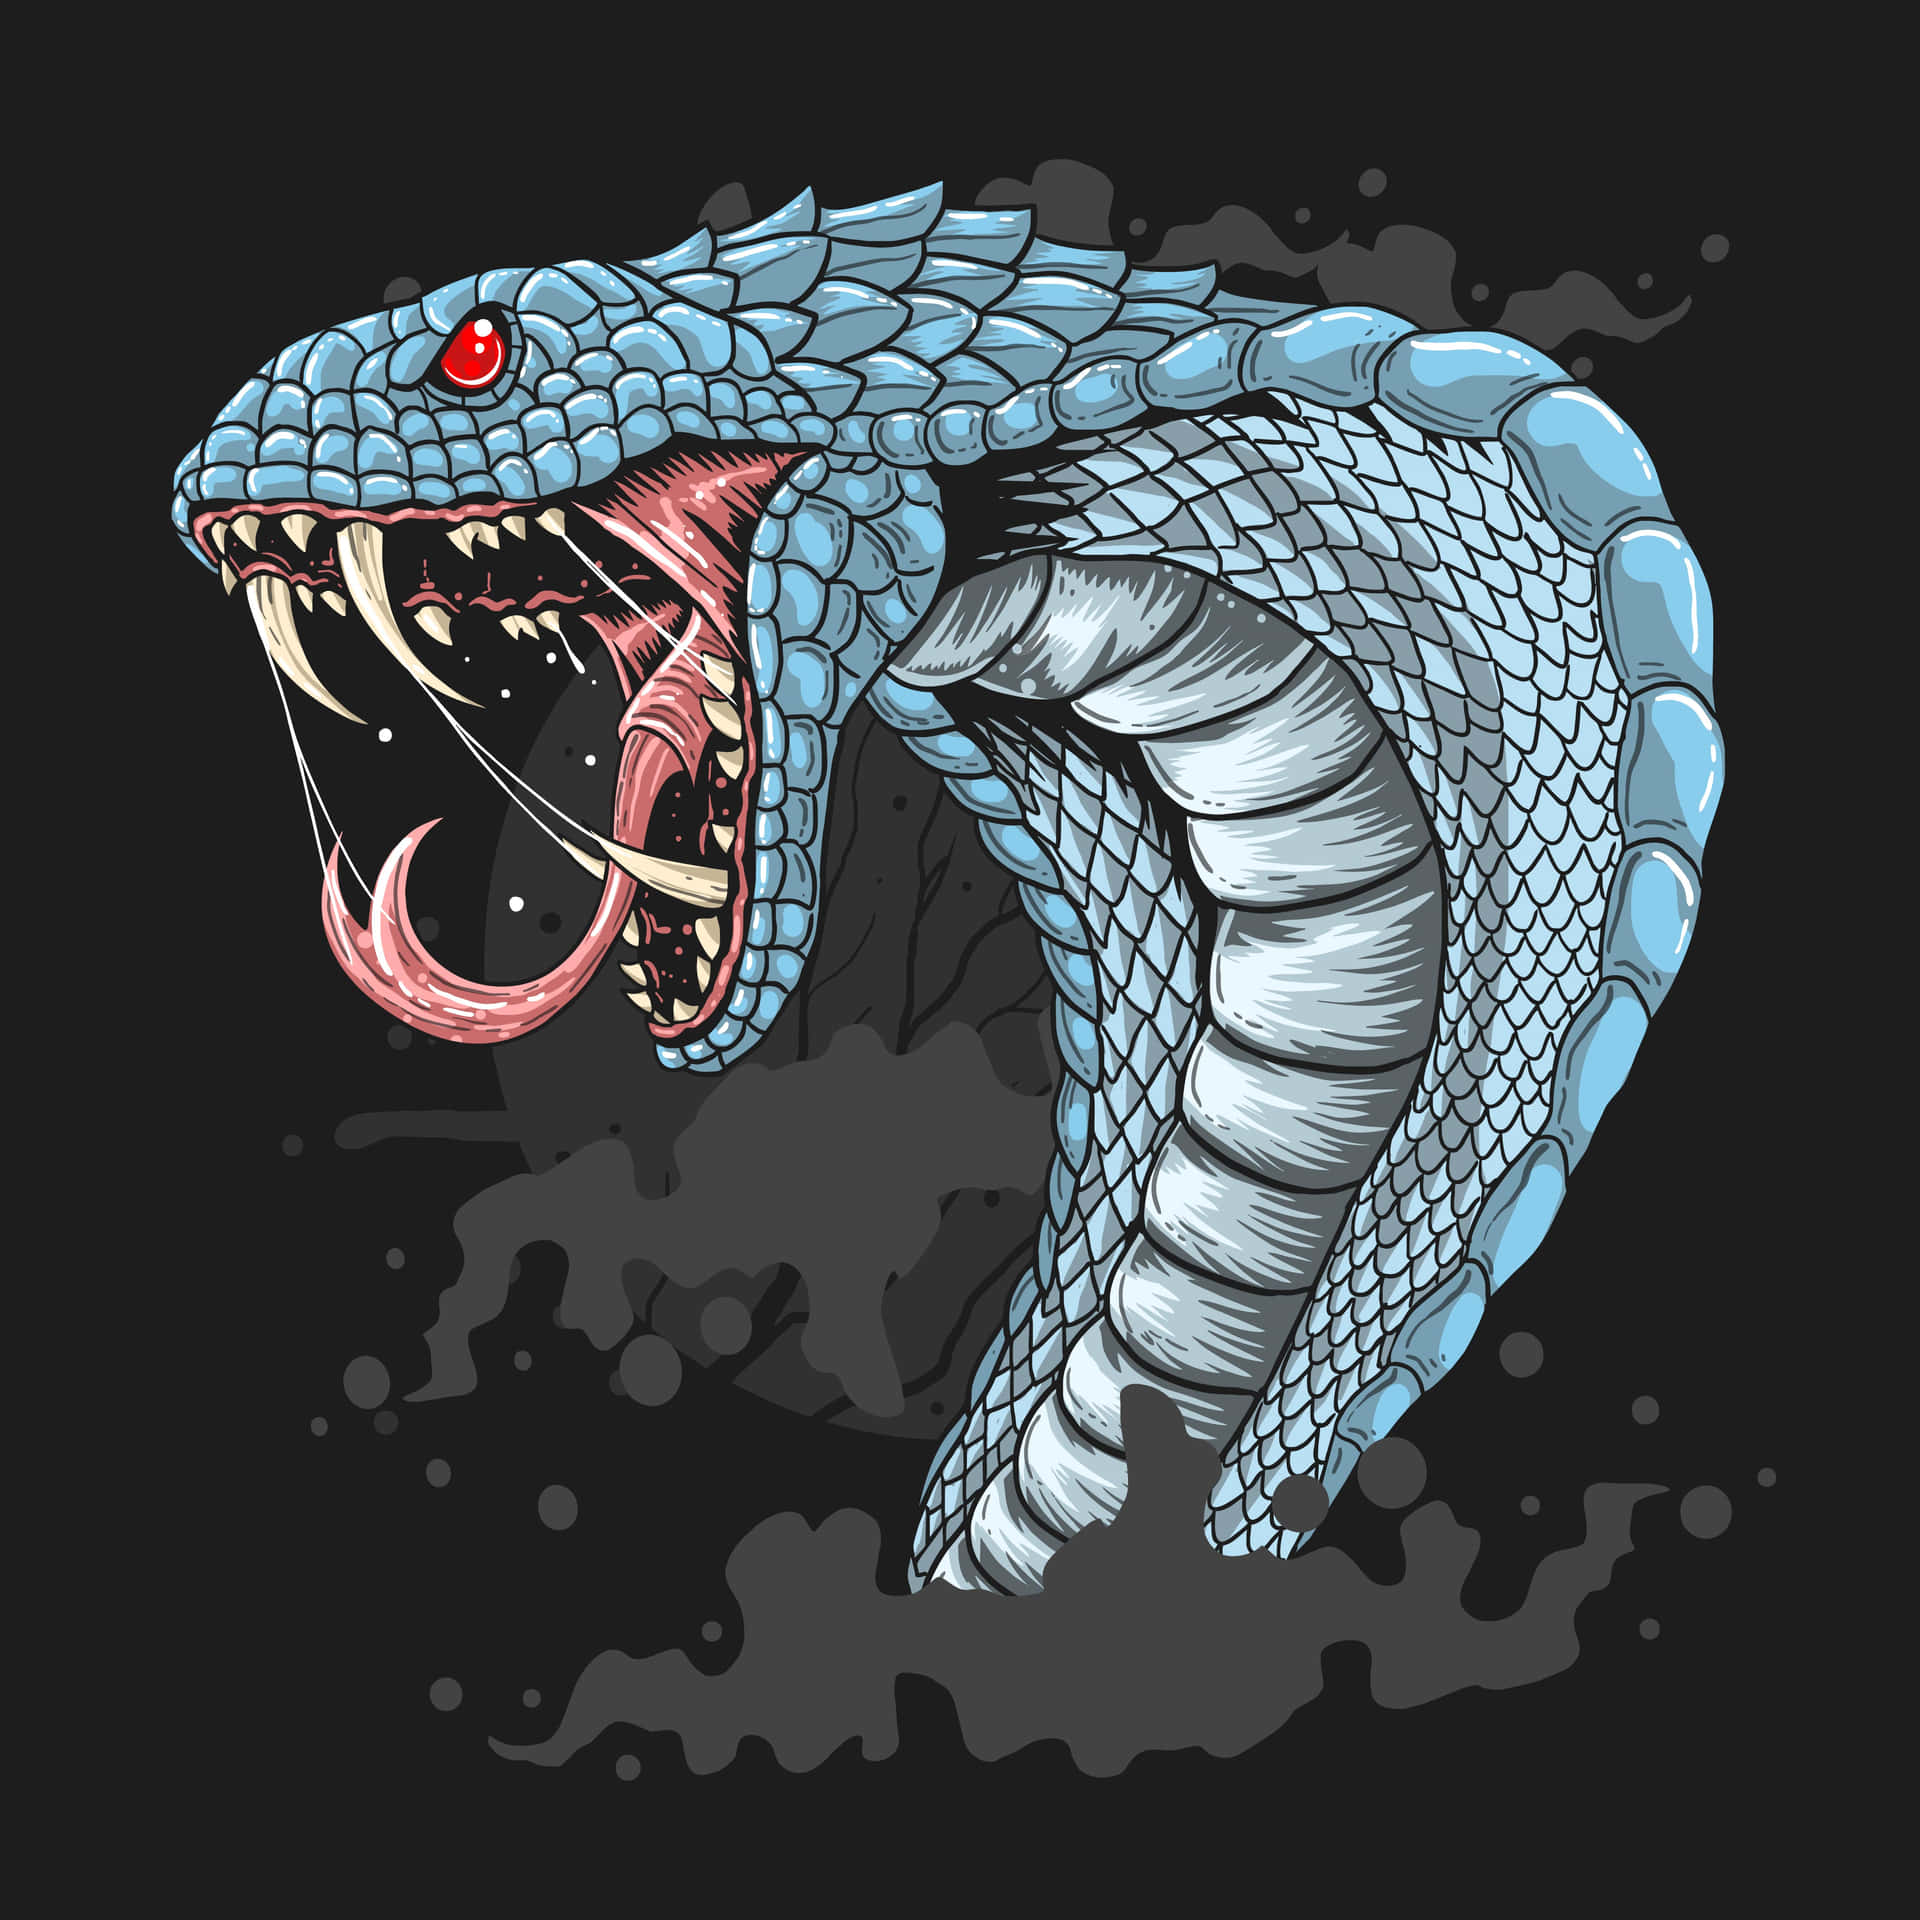  iPhone 12 mini King Python Snake Python Jungle Exotic